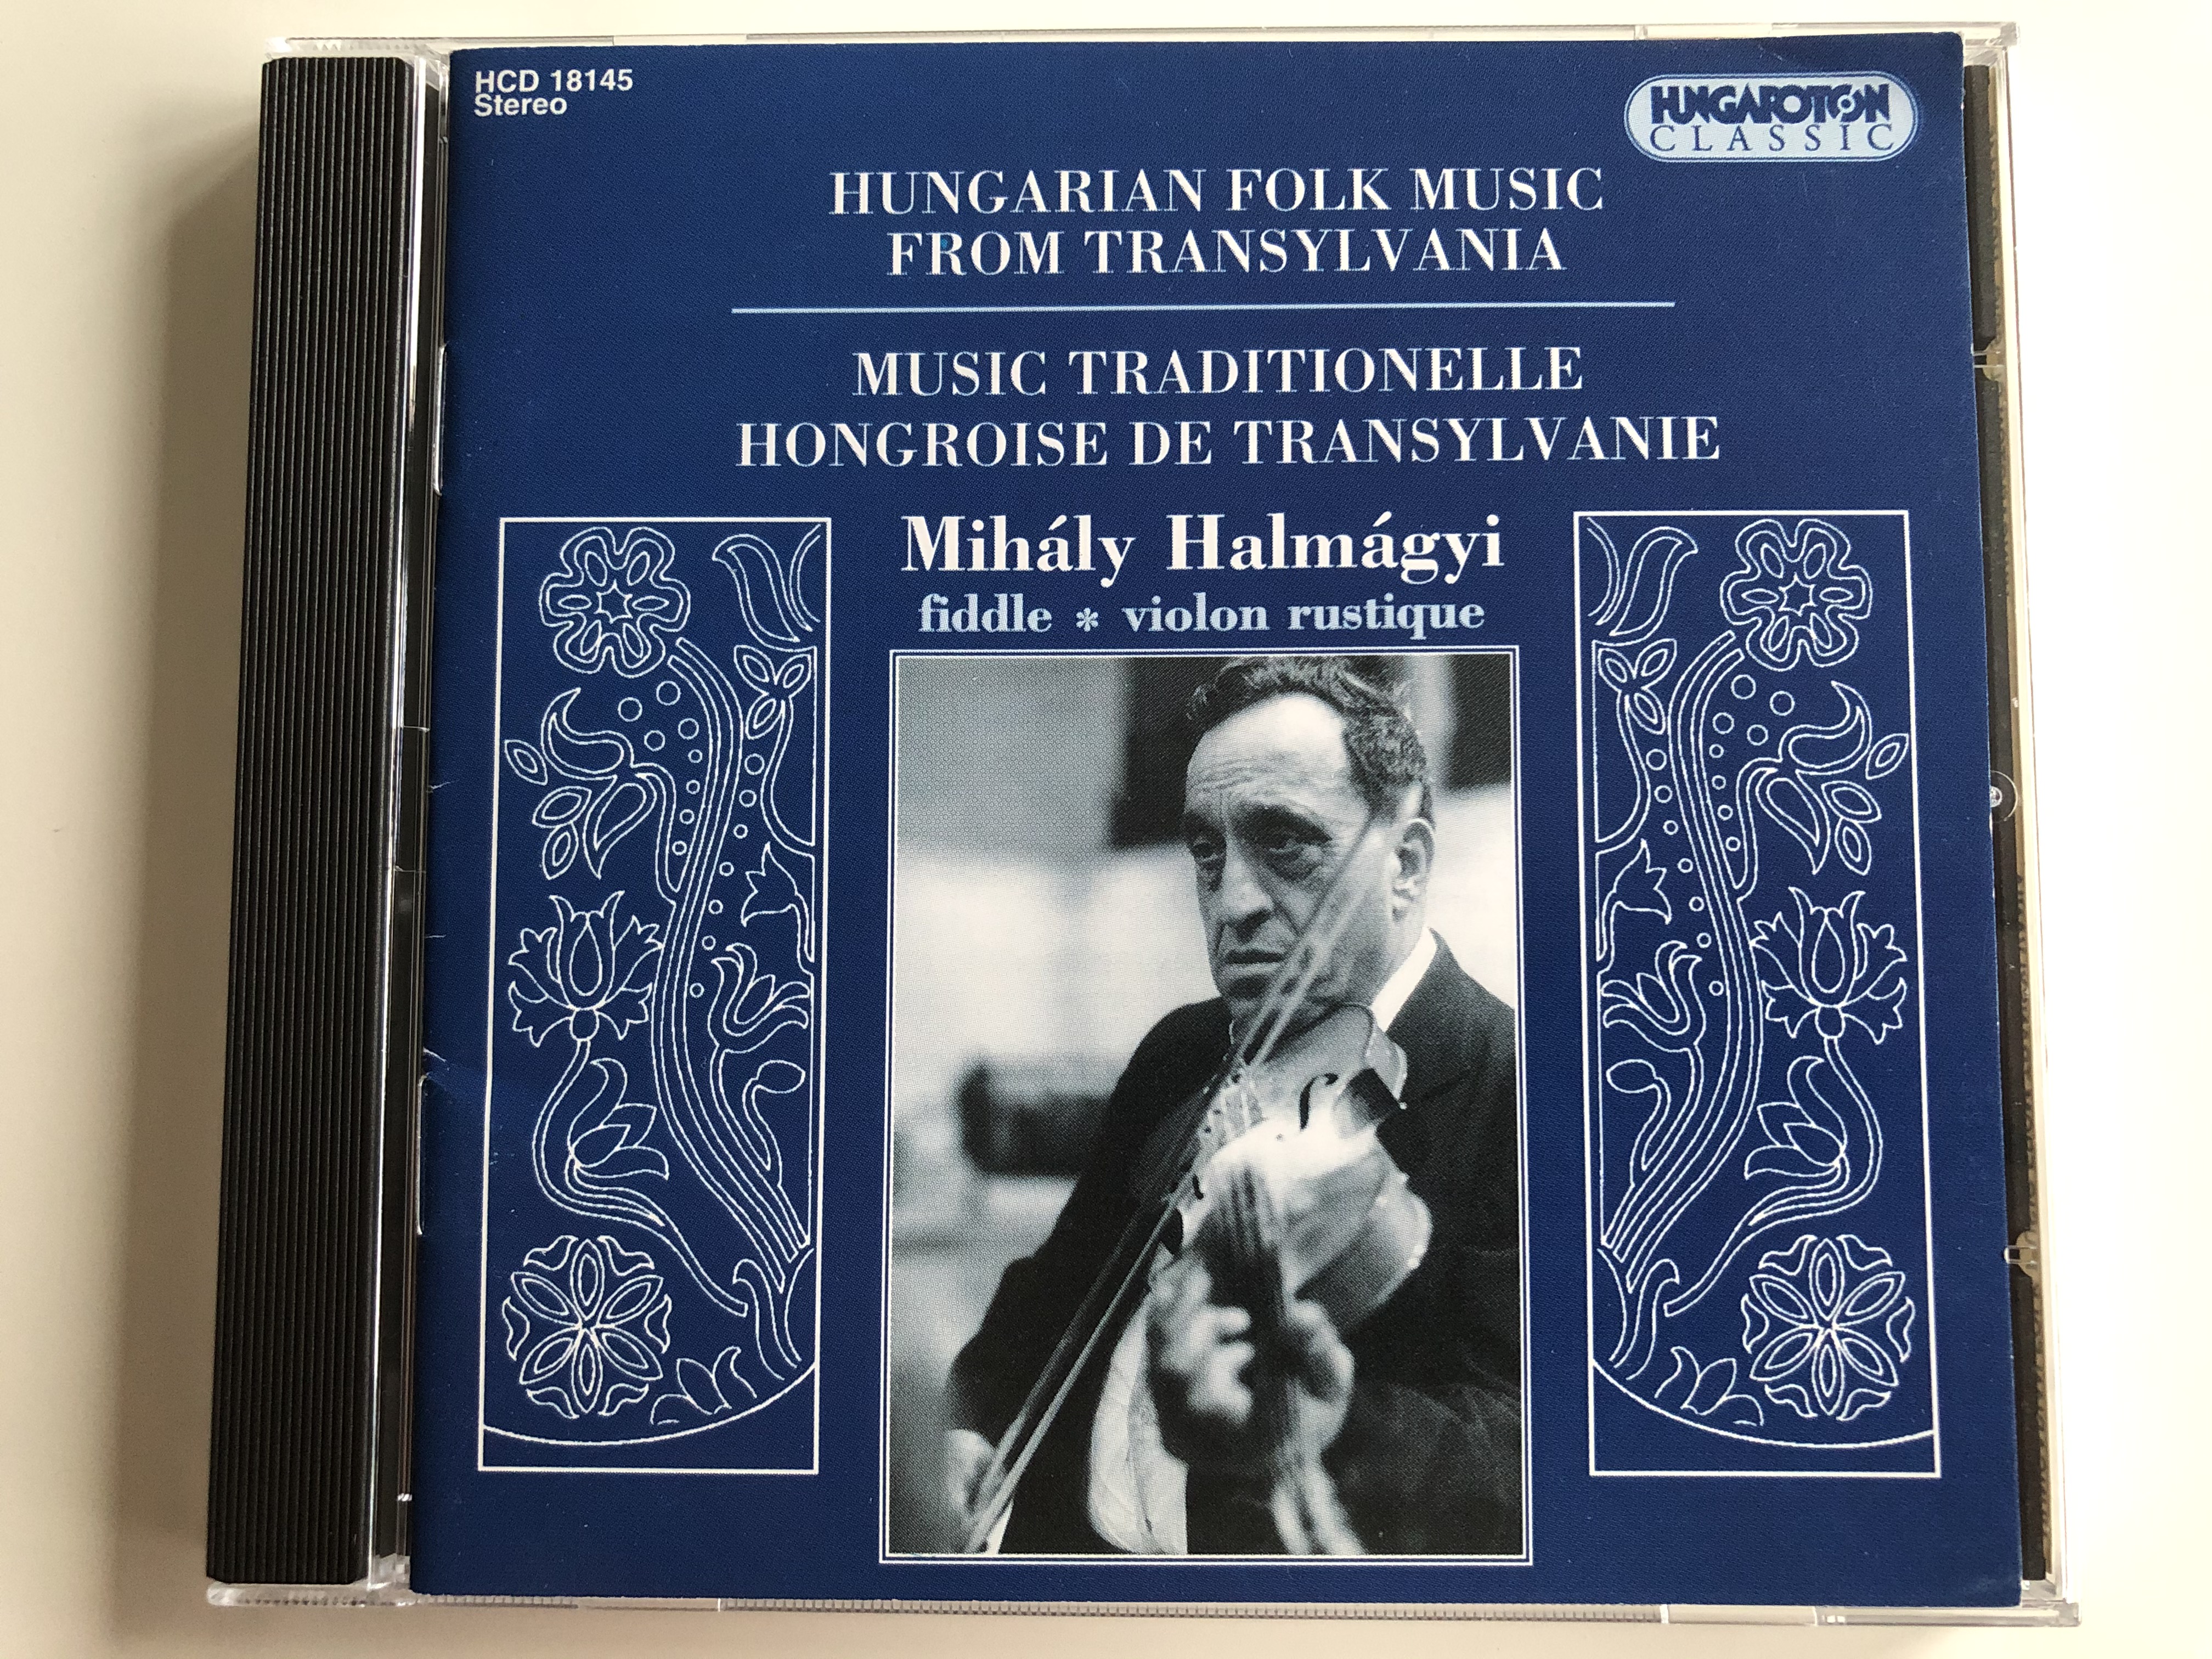 hungarian-folk-music-from-transylvania-music-traditionelle-hongroise-de-transylvanie-mih-ly-halm-gyi-fiddle-violin-rustique-hungaroton-classic-audio-cd-1996-stereo-hcd-18145-1-.jpg